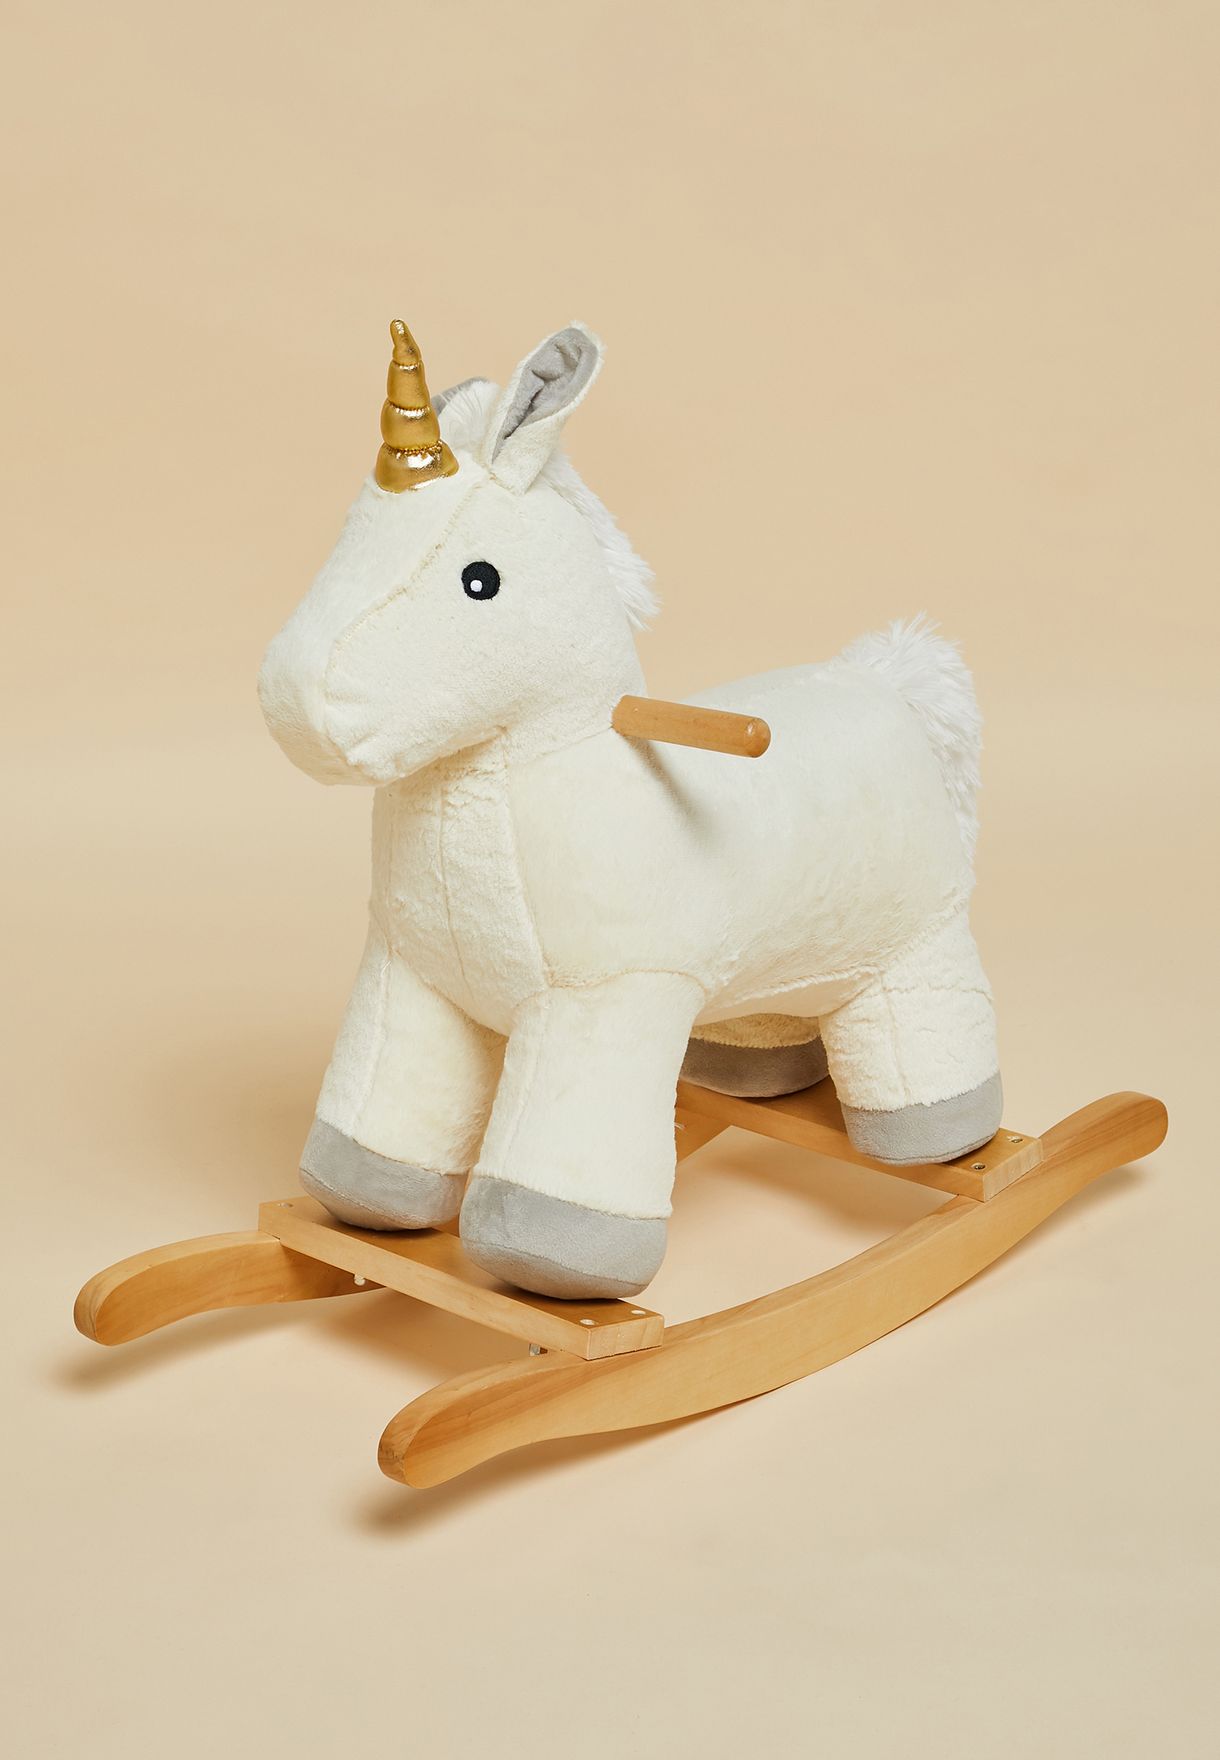 unicorn plush rocker